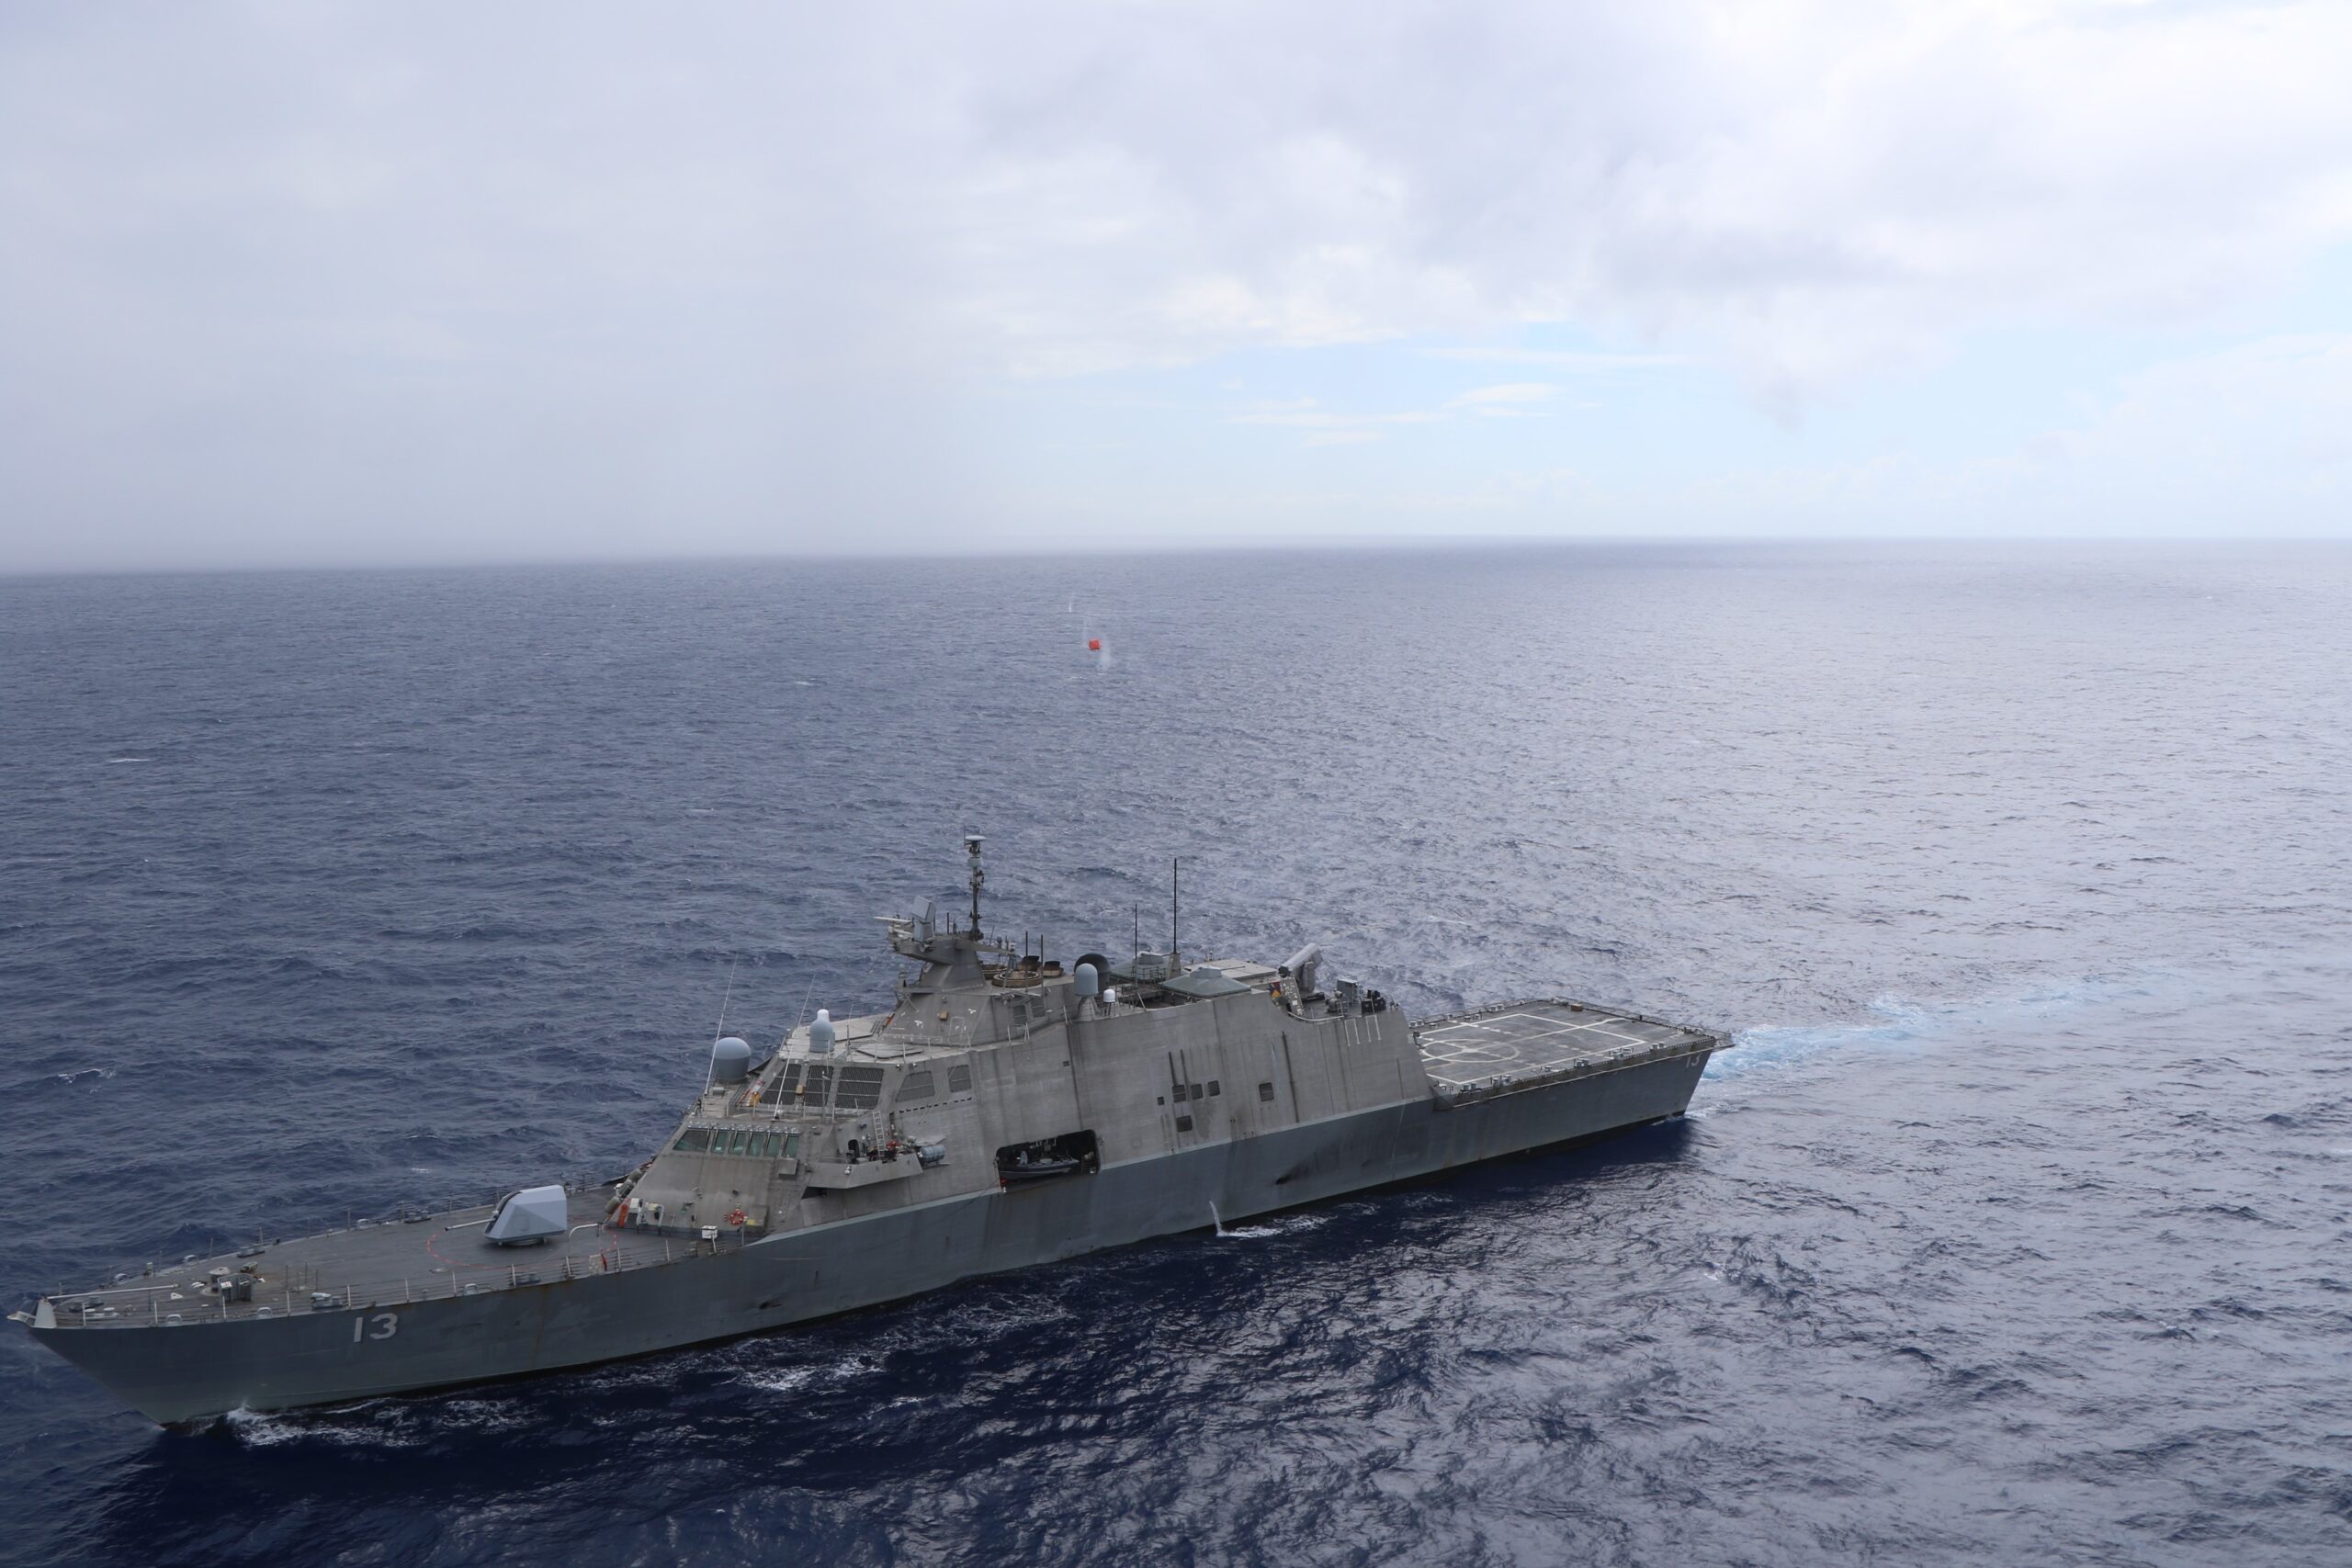 Combat Ship With Coast Guard Detachment Seizes $12 Million In Drugs In Caribbean